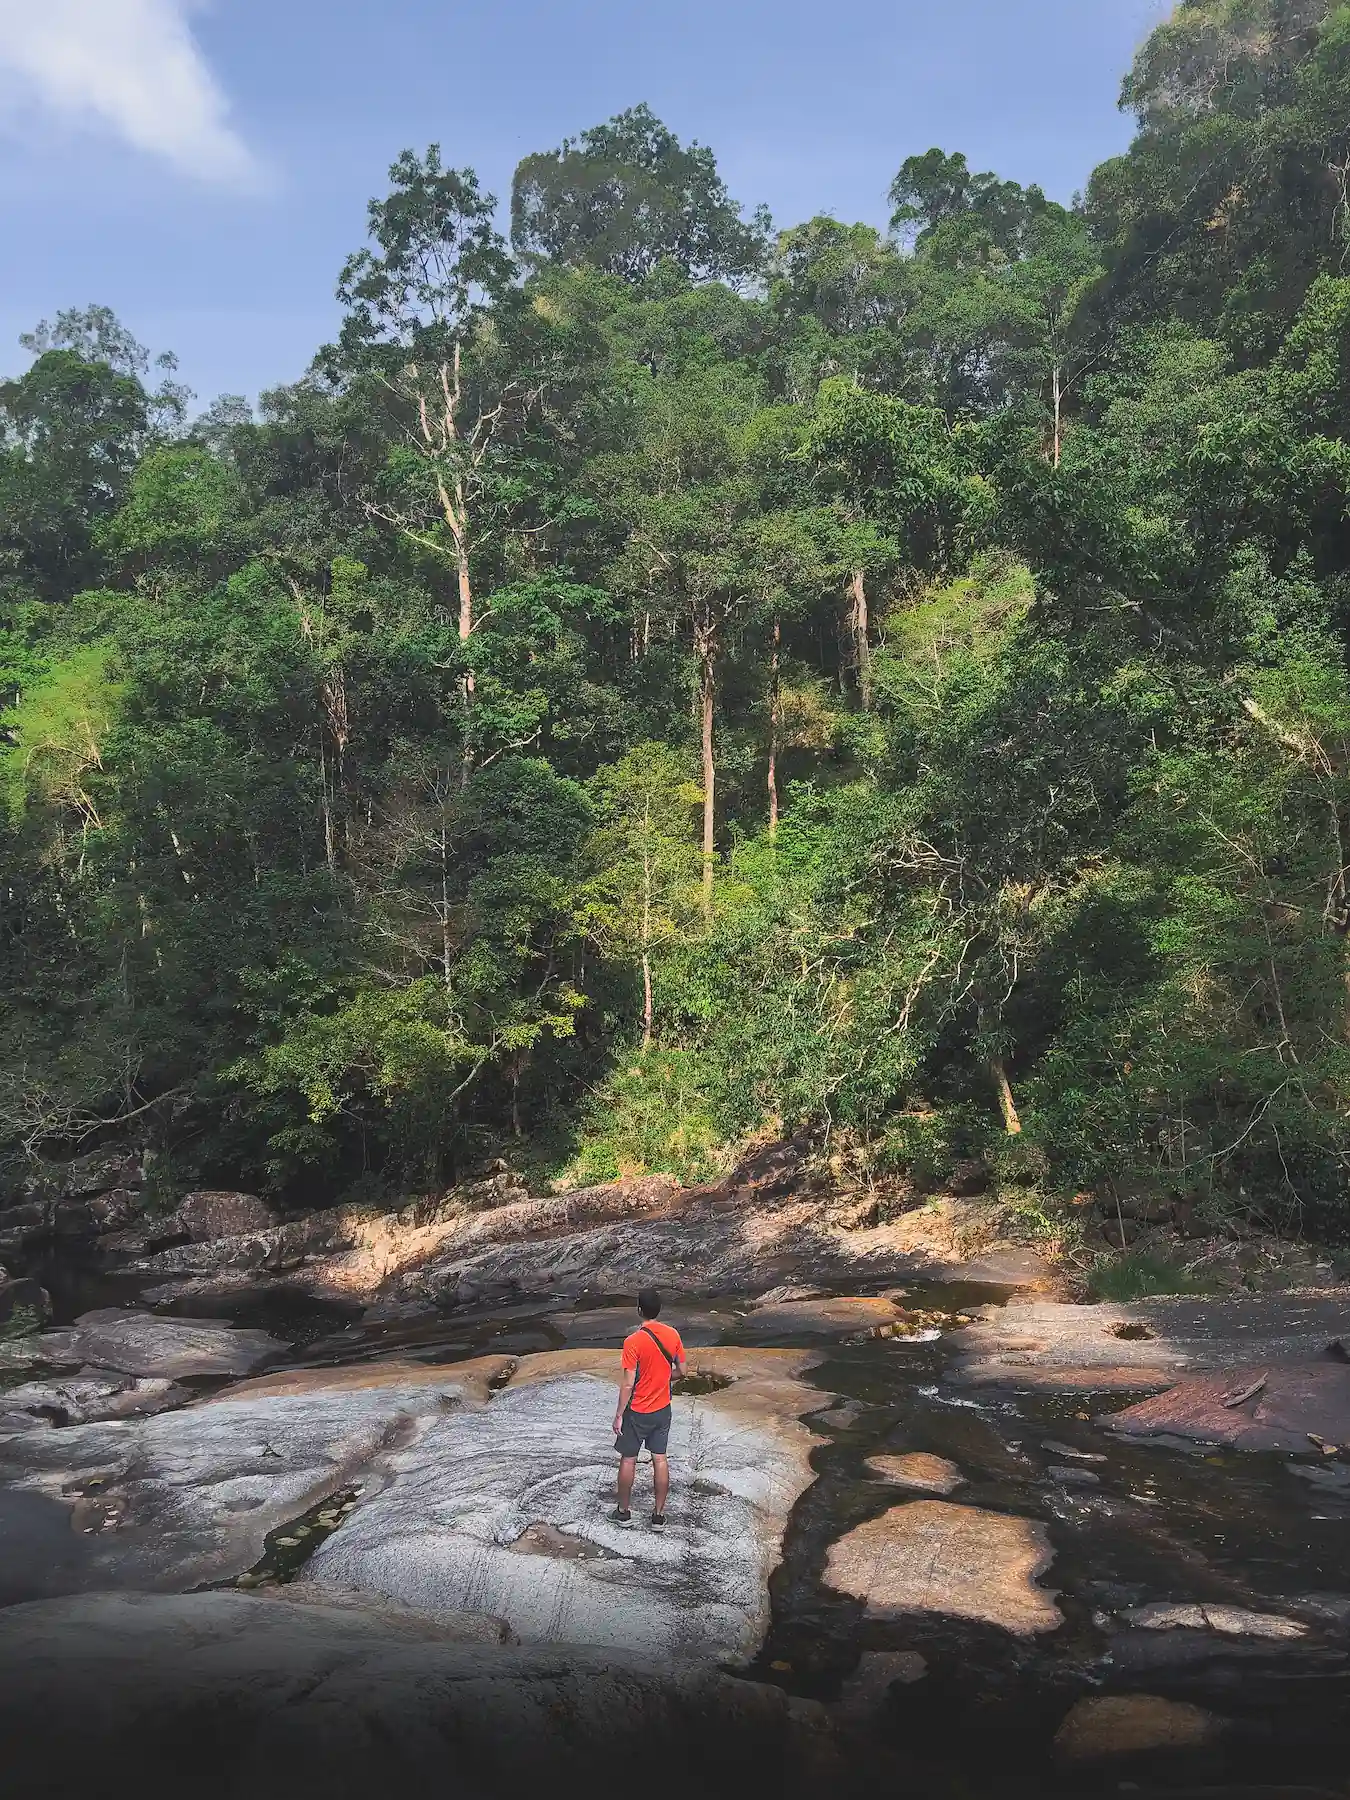 Man in orange shirt stands on rocks in tropical rainforest